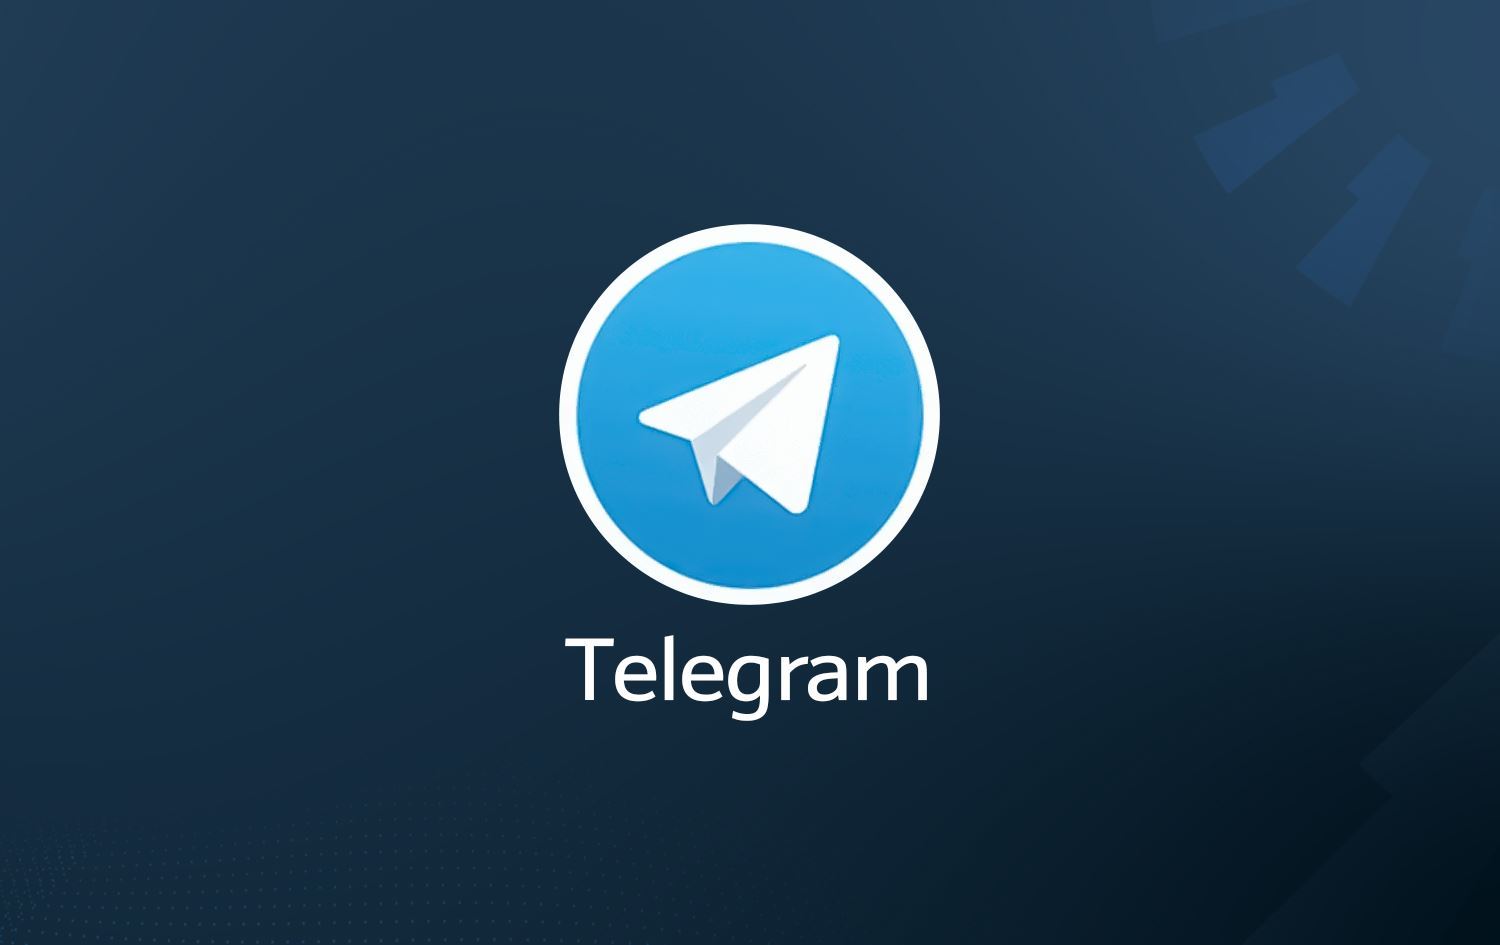 Matthew Guerra San Antonio Telegram Channel and Group